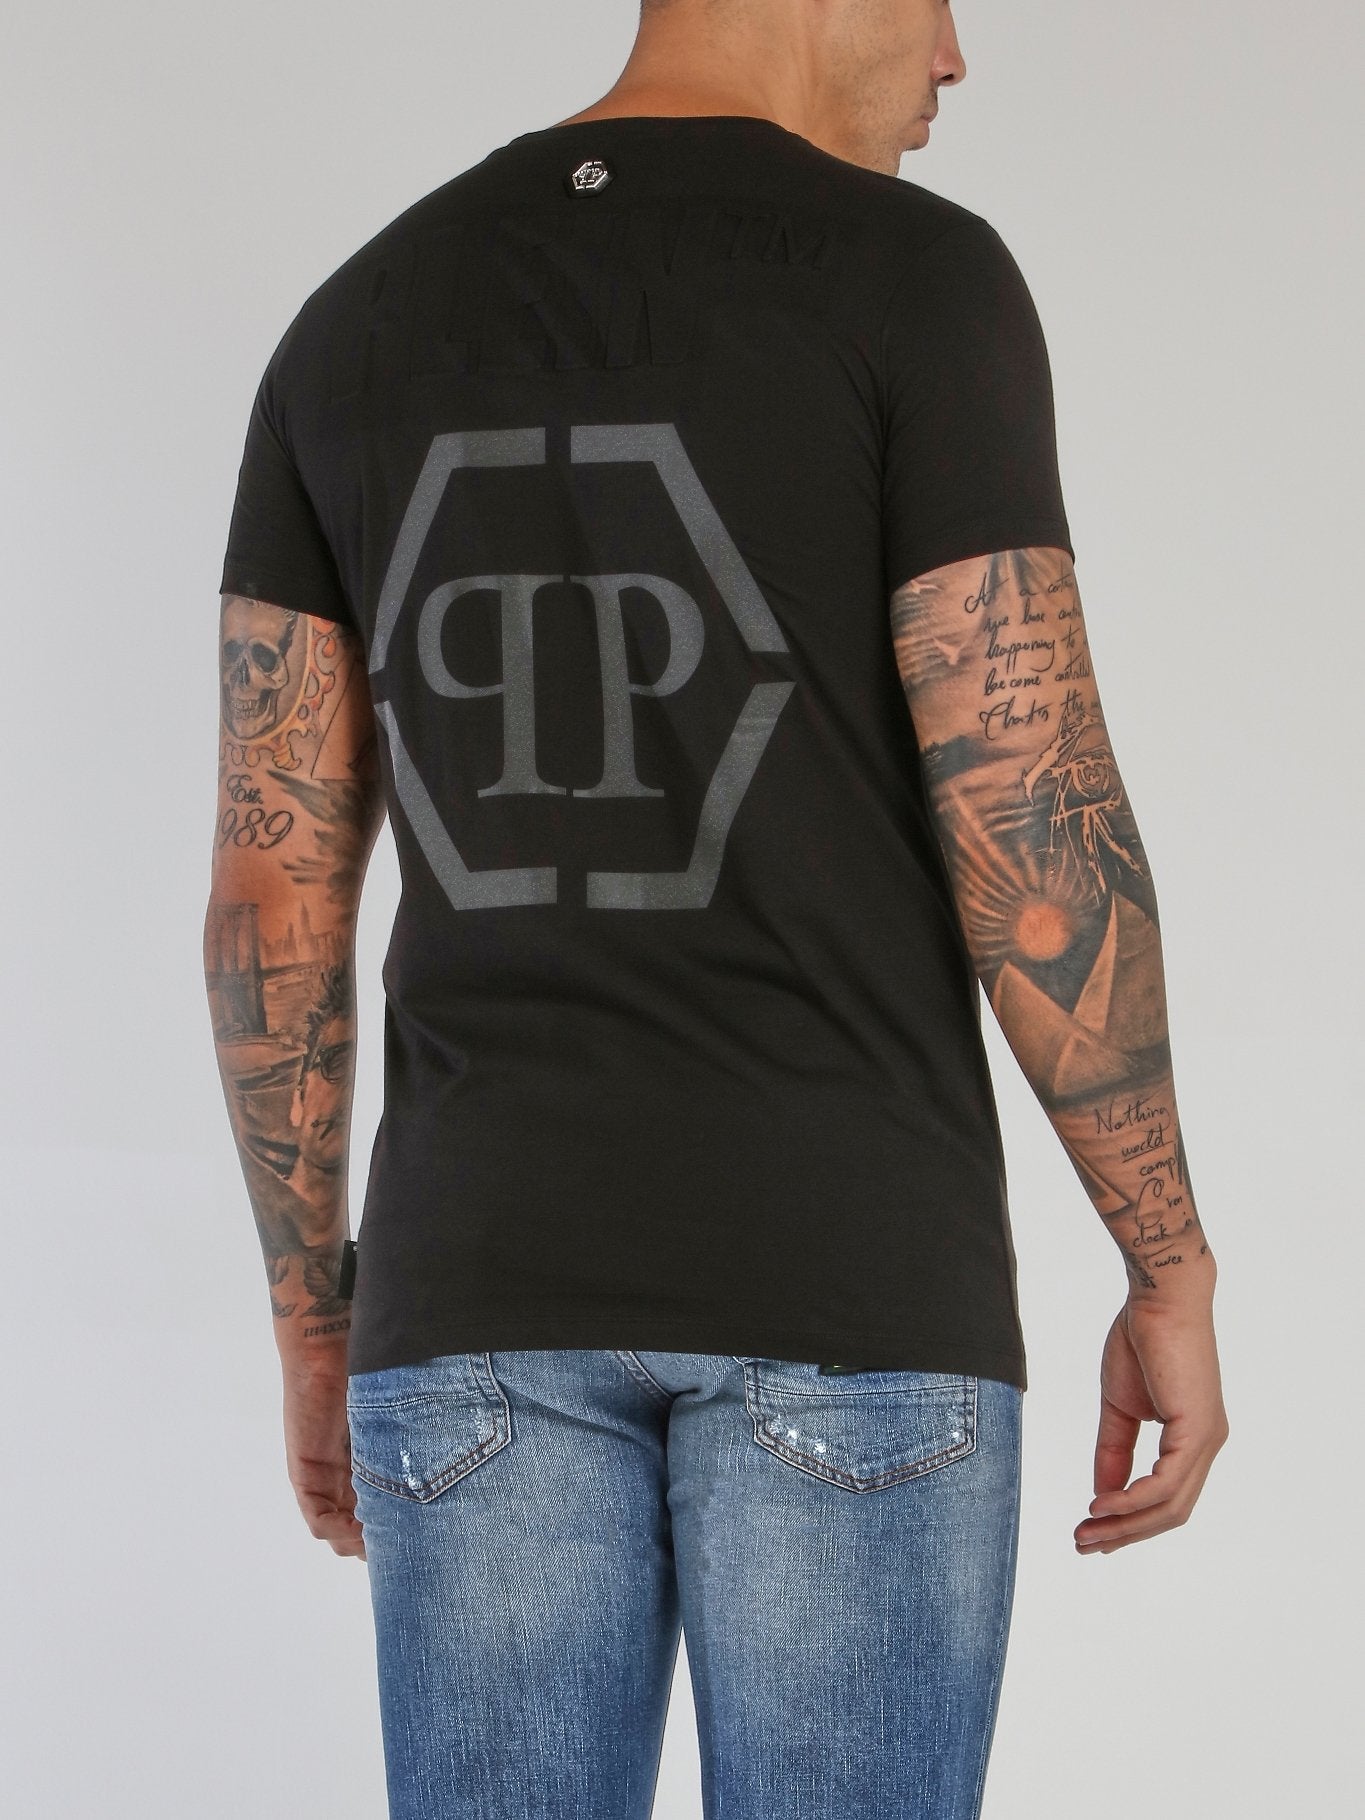 Black Reflective Monogram Skull T-Shirt